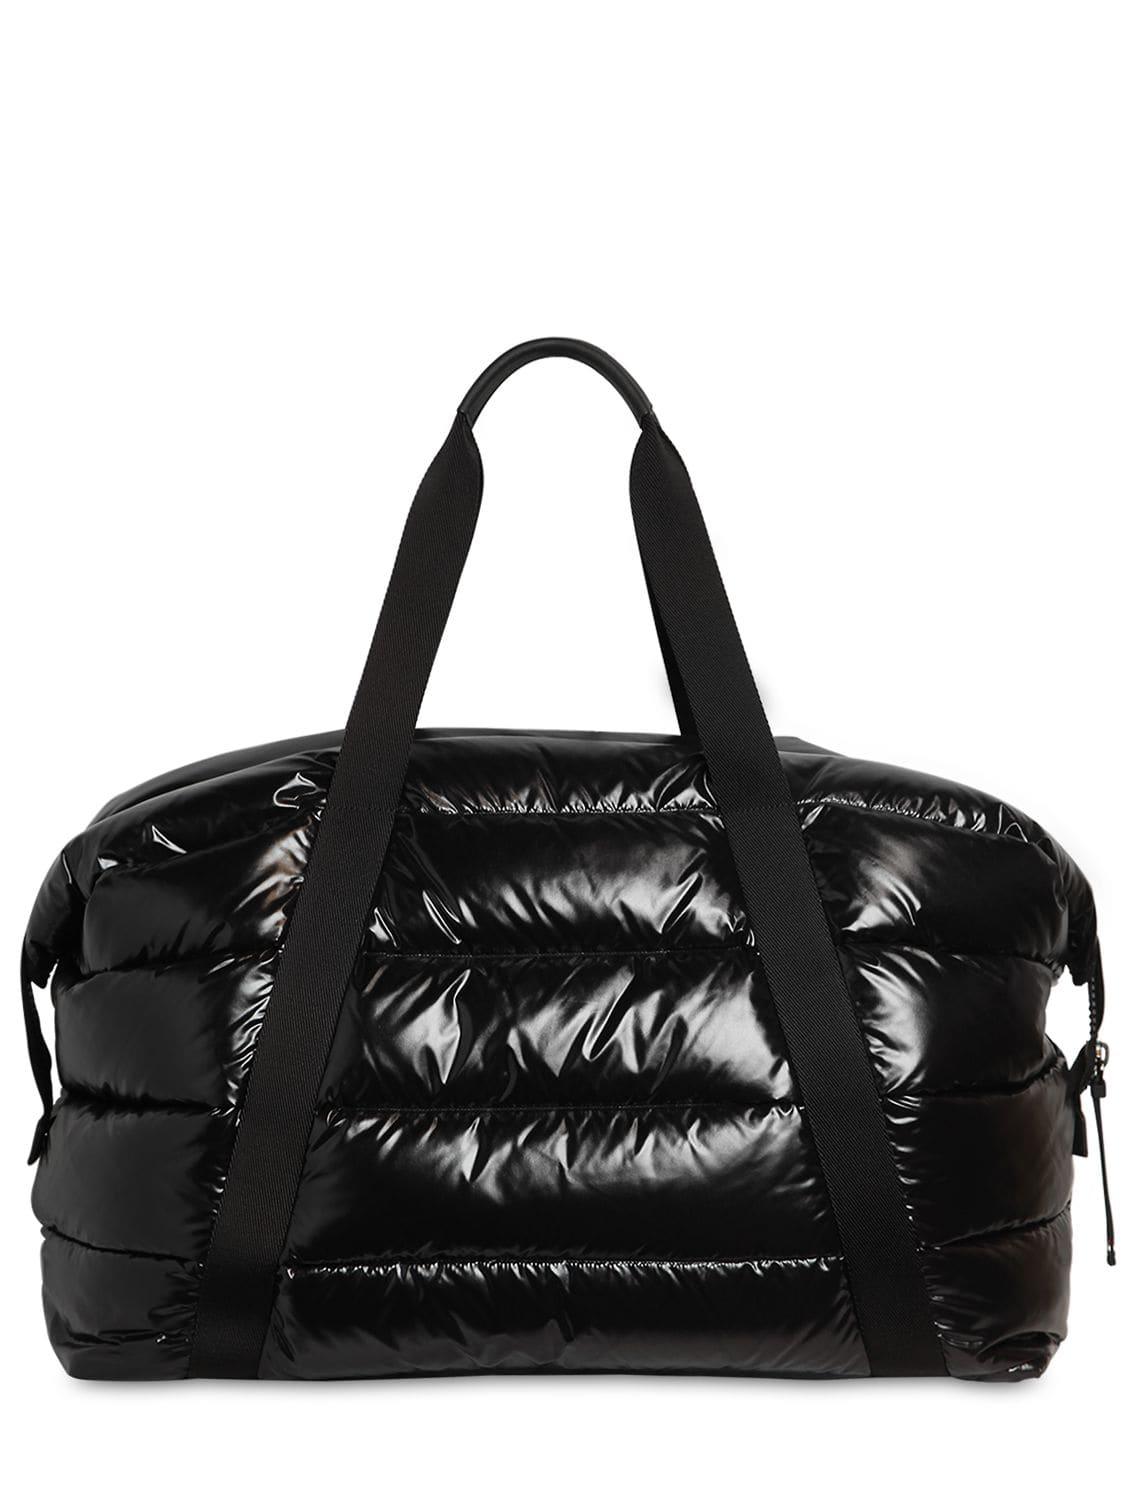 Moncler Mayenne Duffle Bag in Black for Men - Lyst